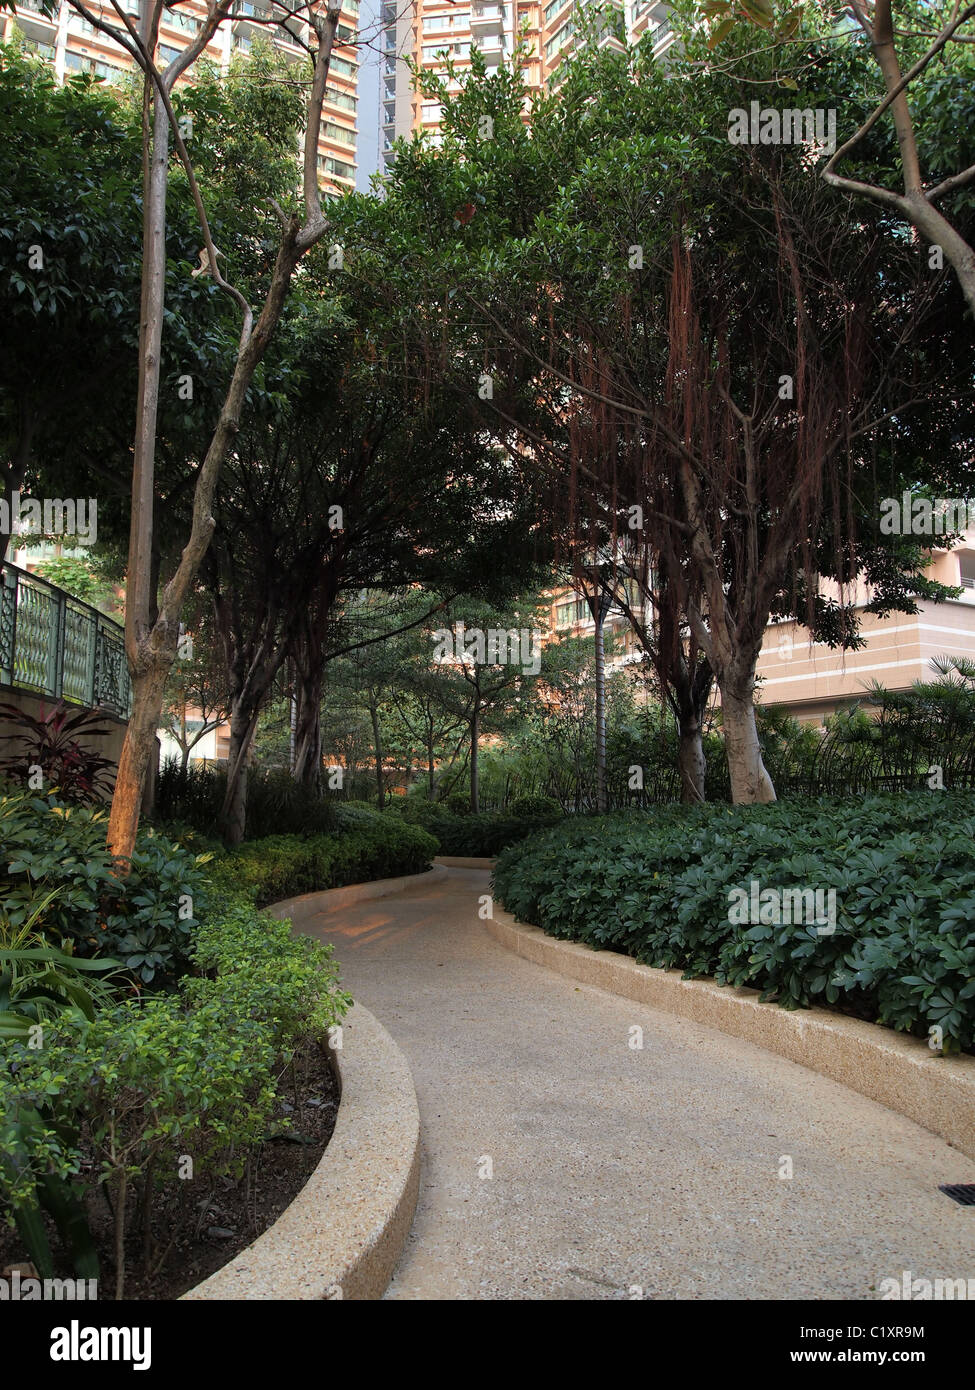 Walking road path in a formal garden Stock Photo